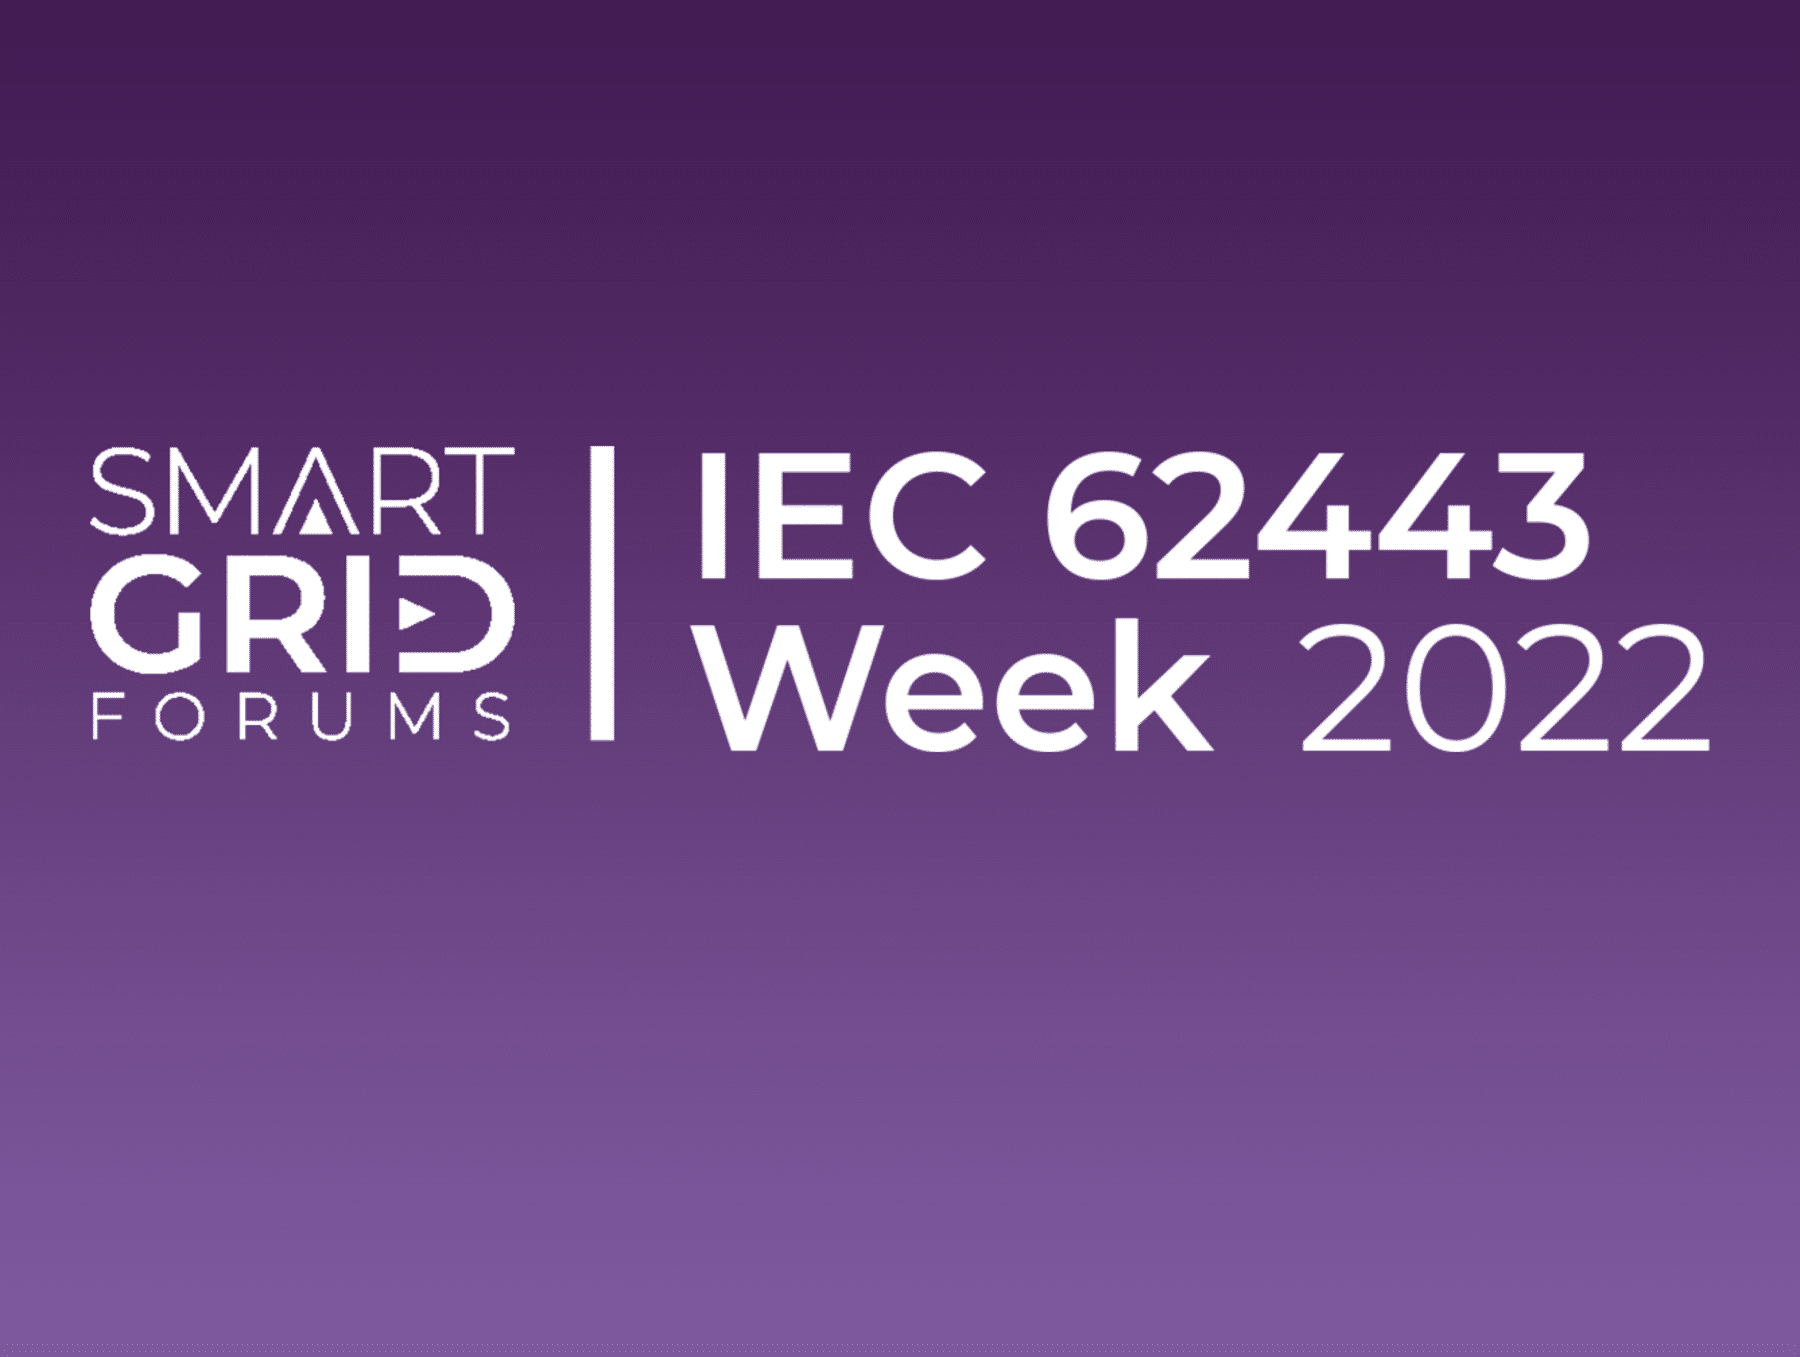 ENCS at IEC 62443 Week 2022 1317 June Edinburgh, UK ENCS